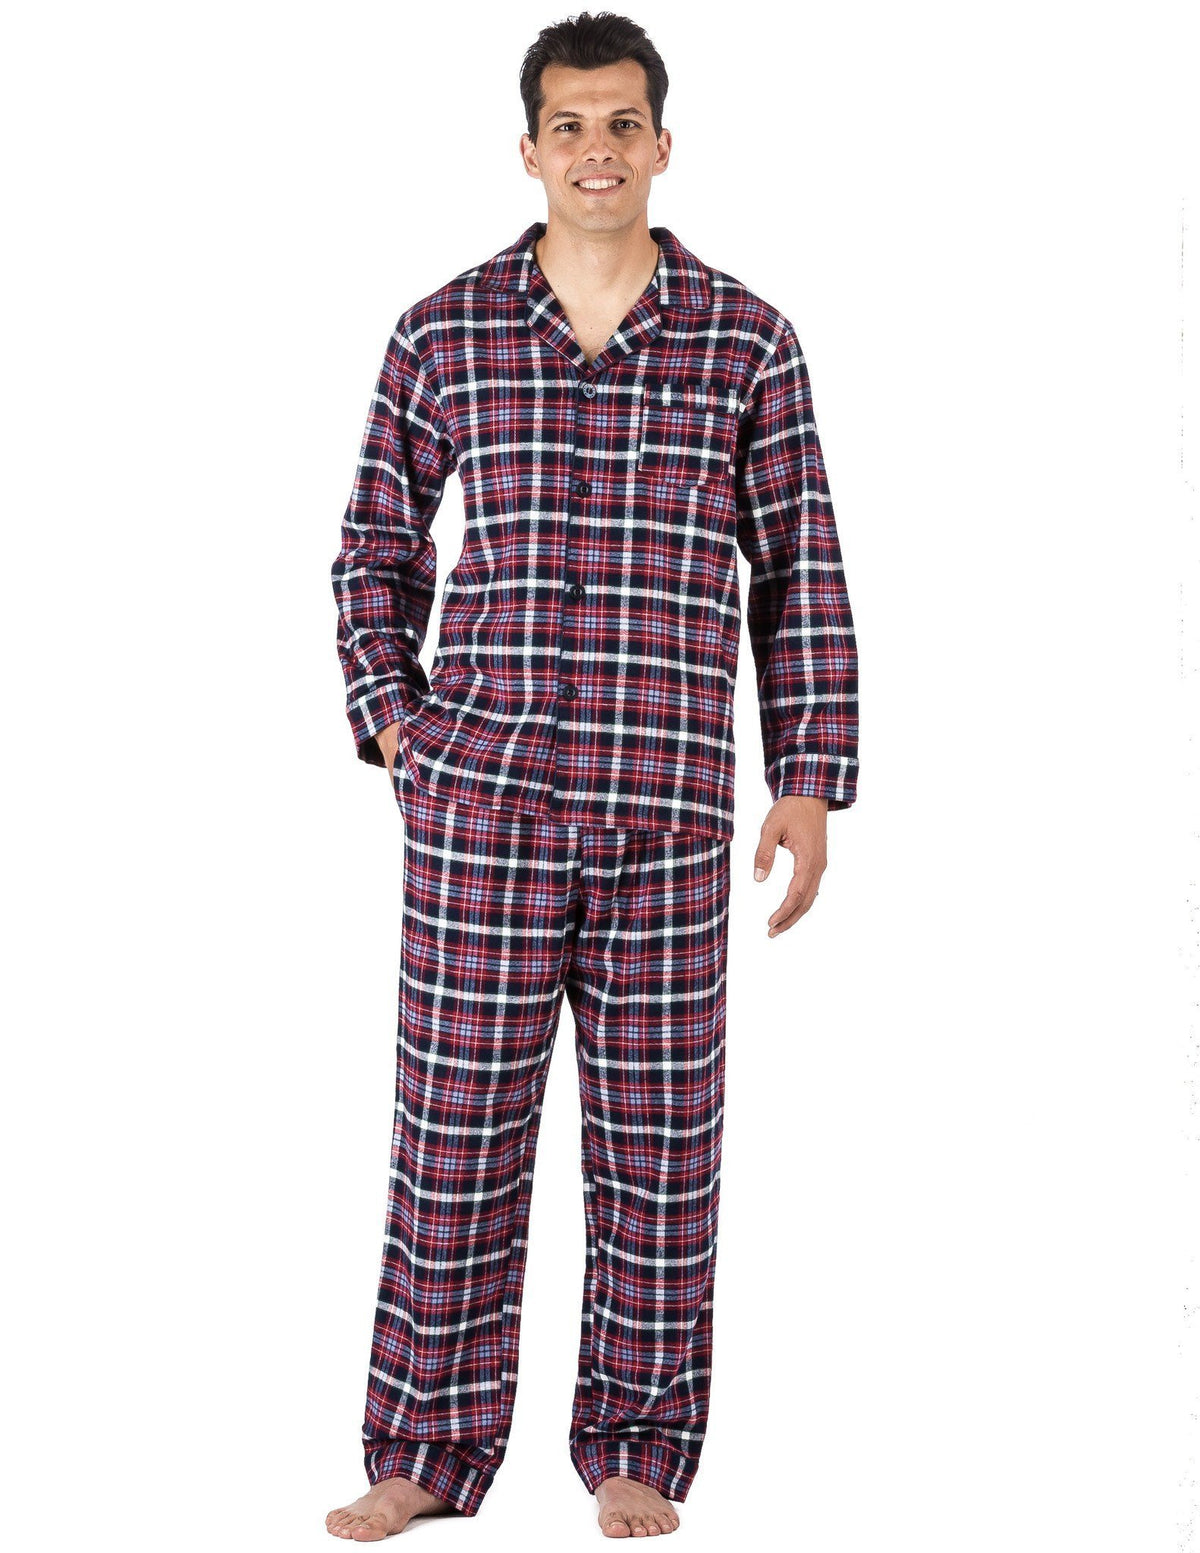 Relaxed Fit Men's Premium 100% Cotton Flannel Pajama Sleepwear Set - Blue/Red Plaid